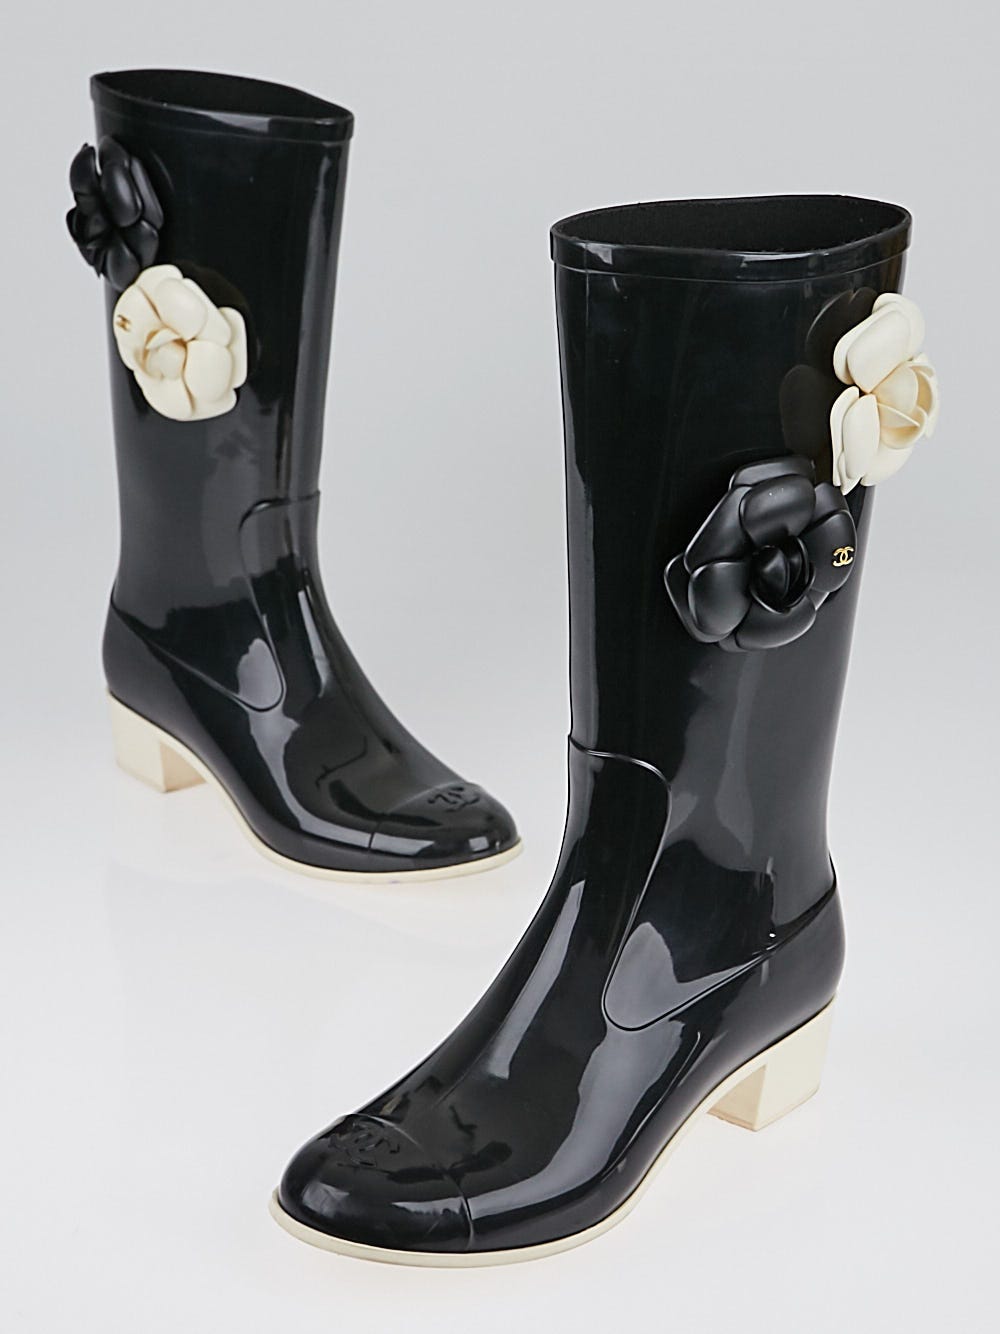 women's chanel rain boots